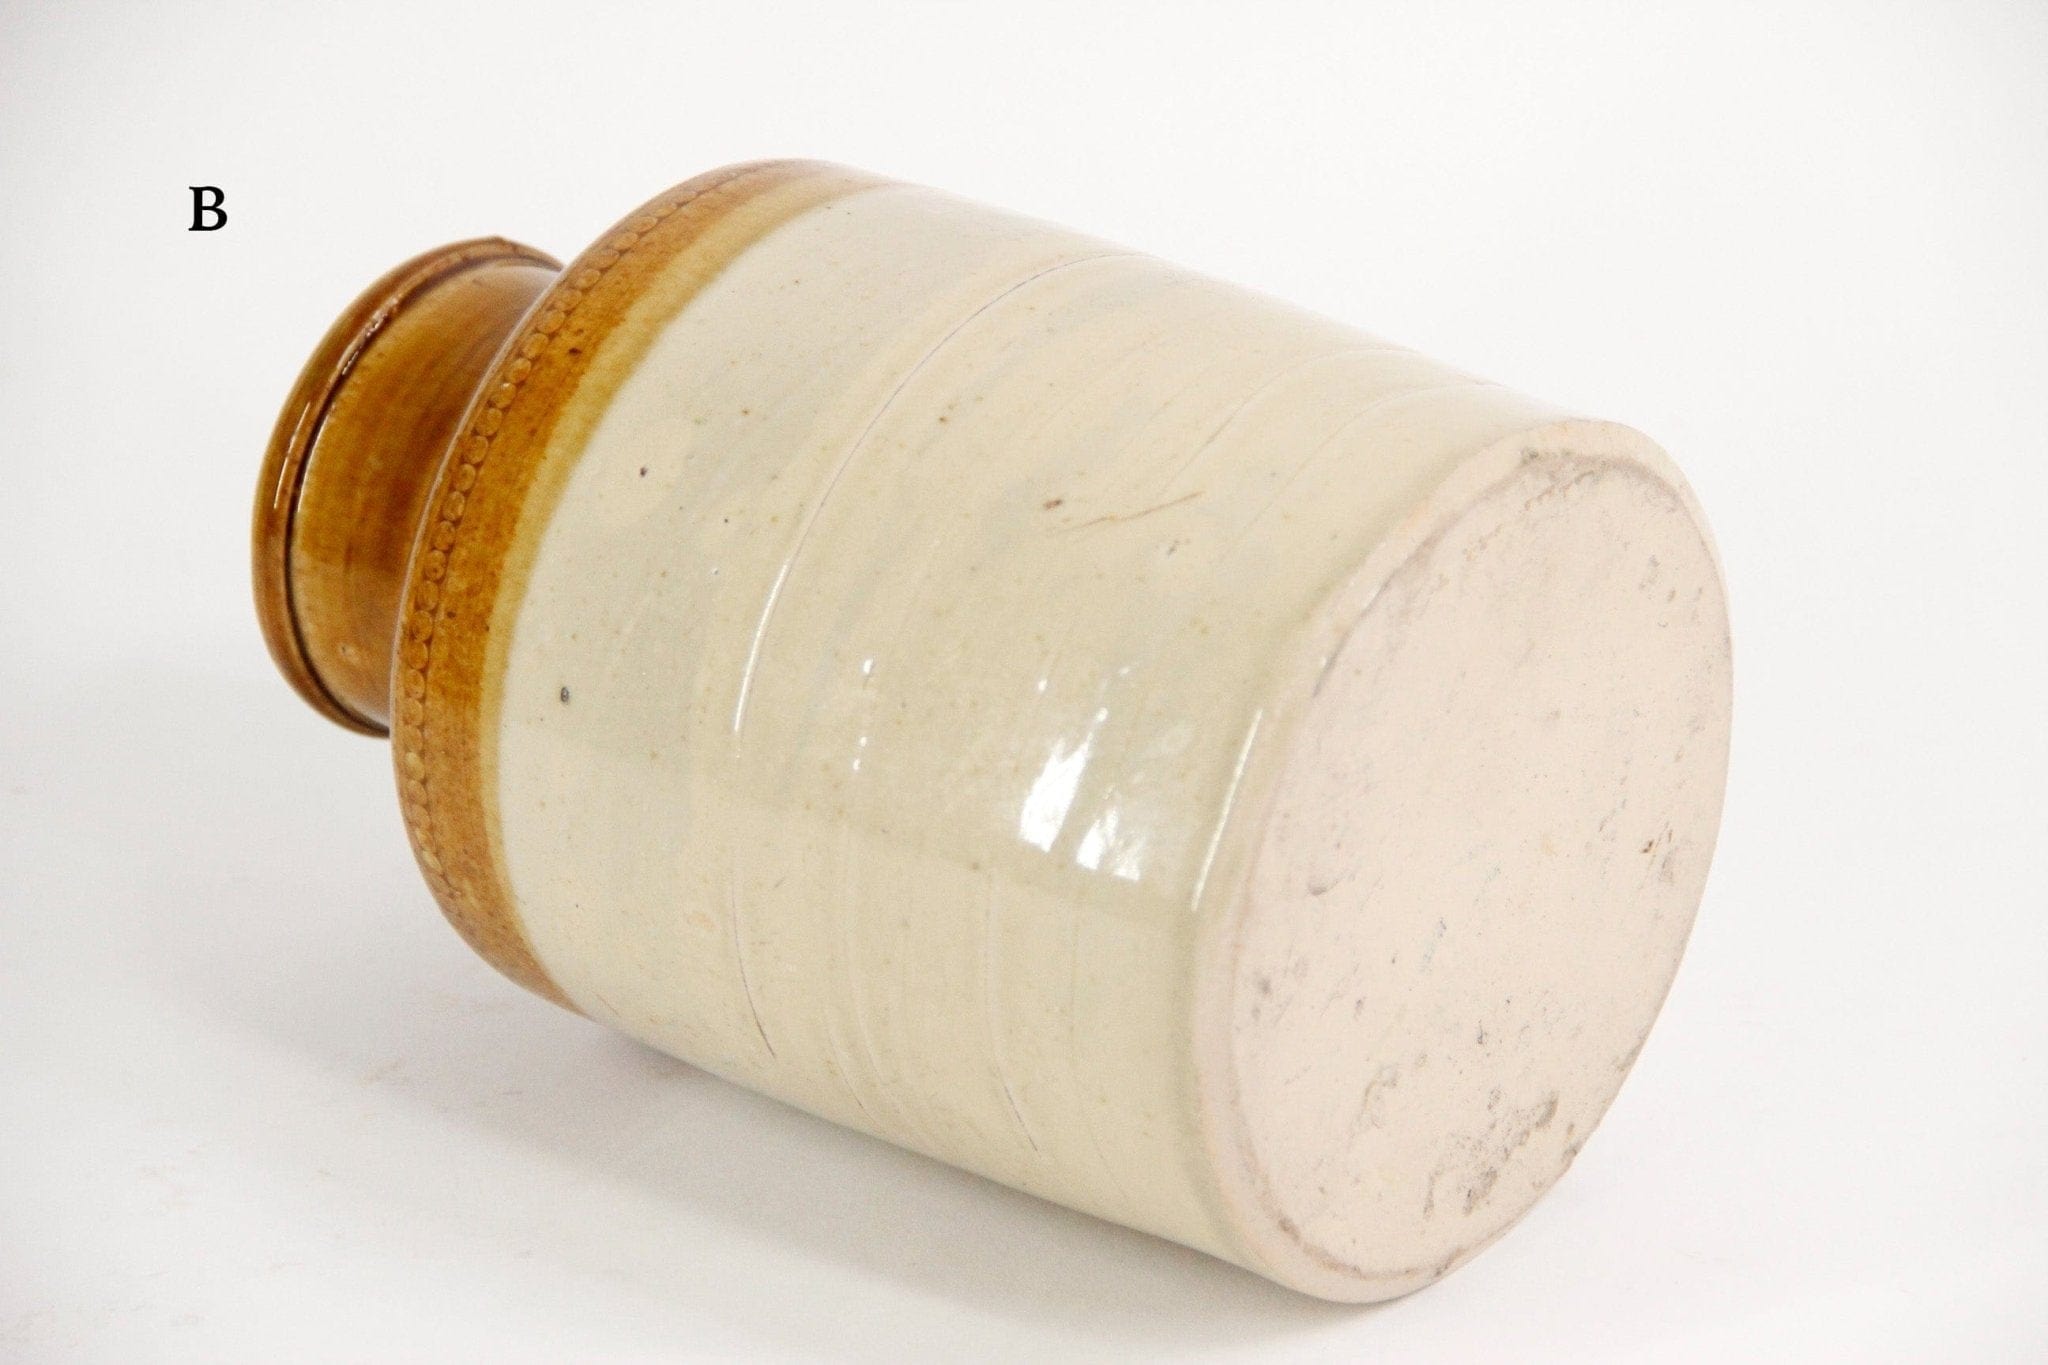 Antique Stoneware Canning Jars from England  B bottom